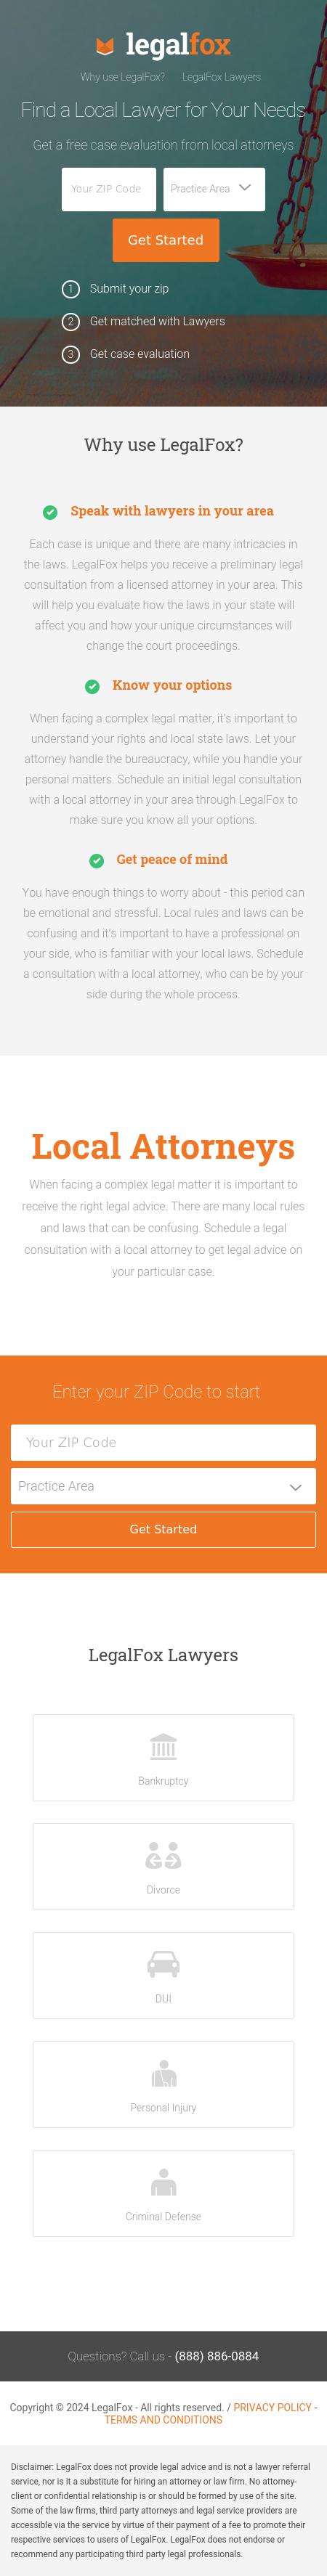 Find a Local Attorney - Fargo ND Lawyers